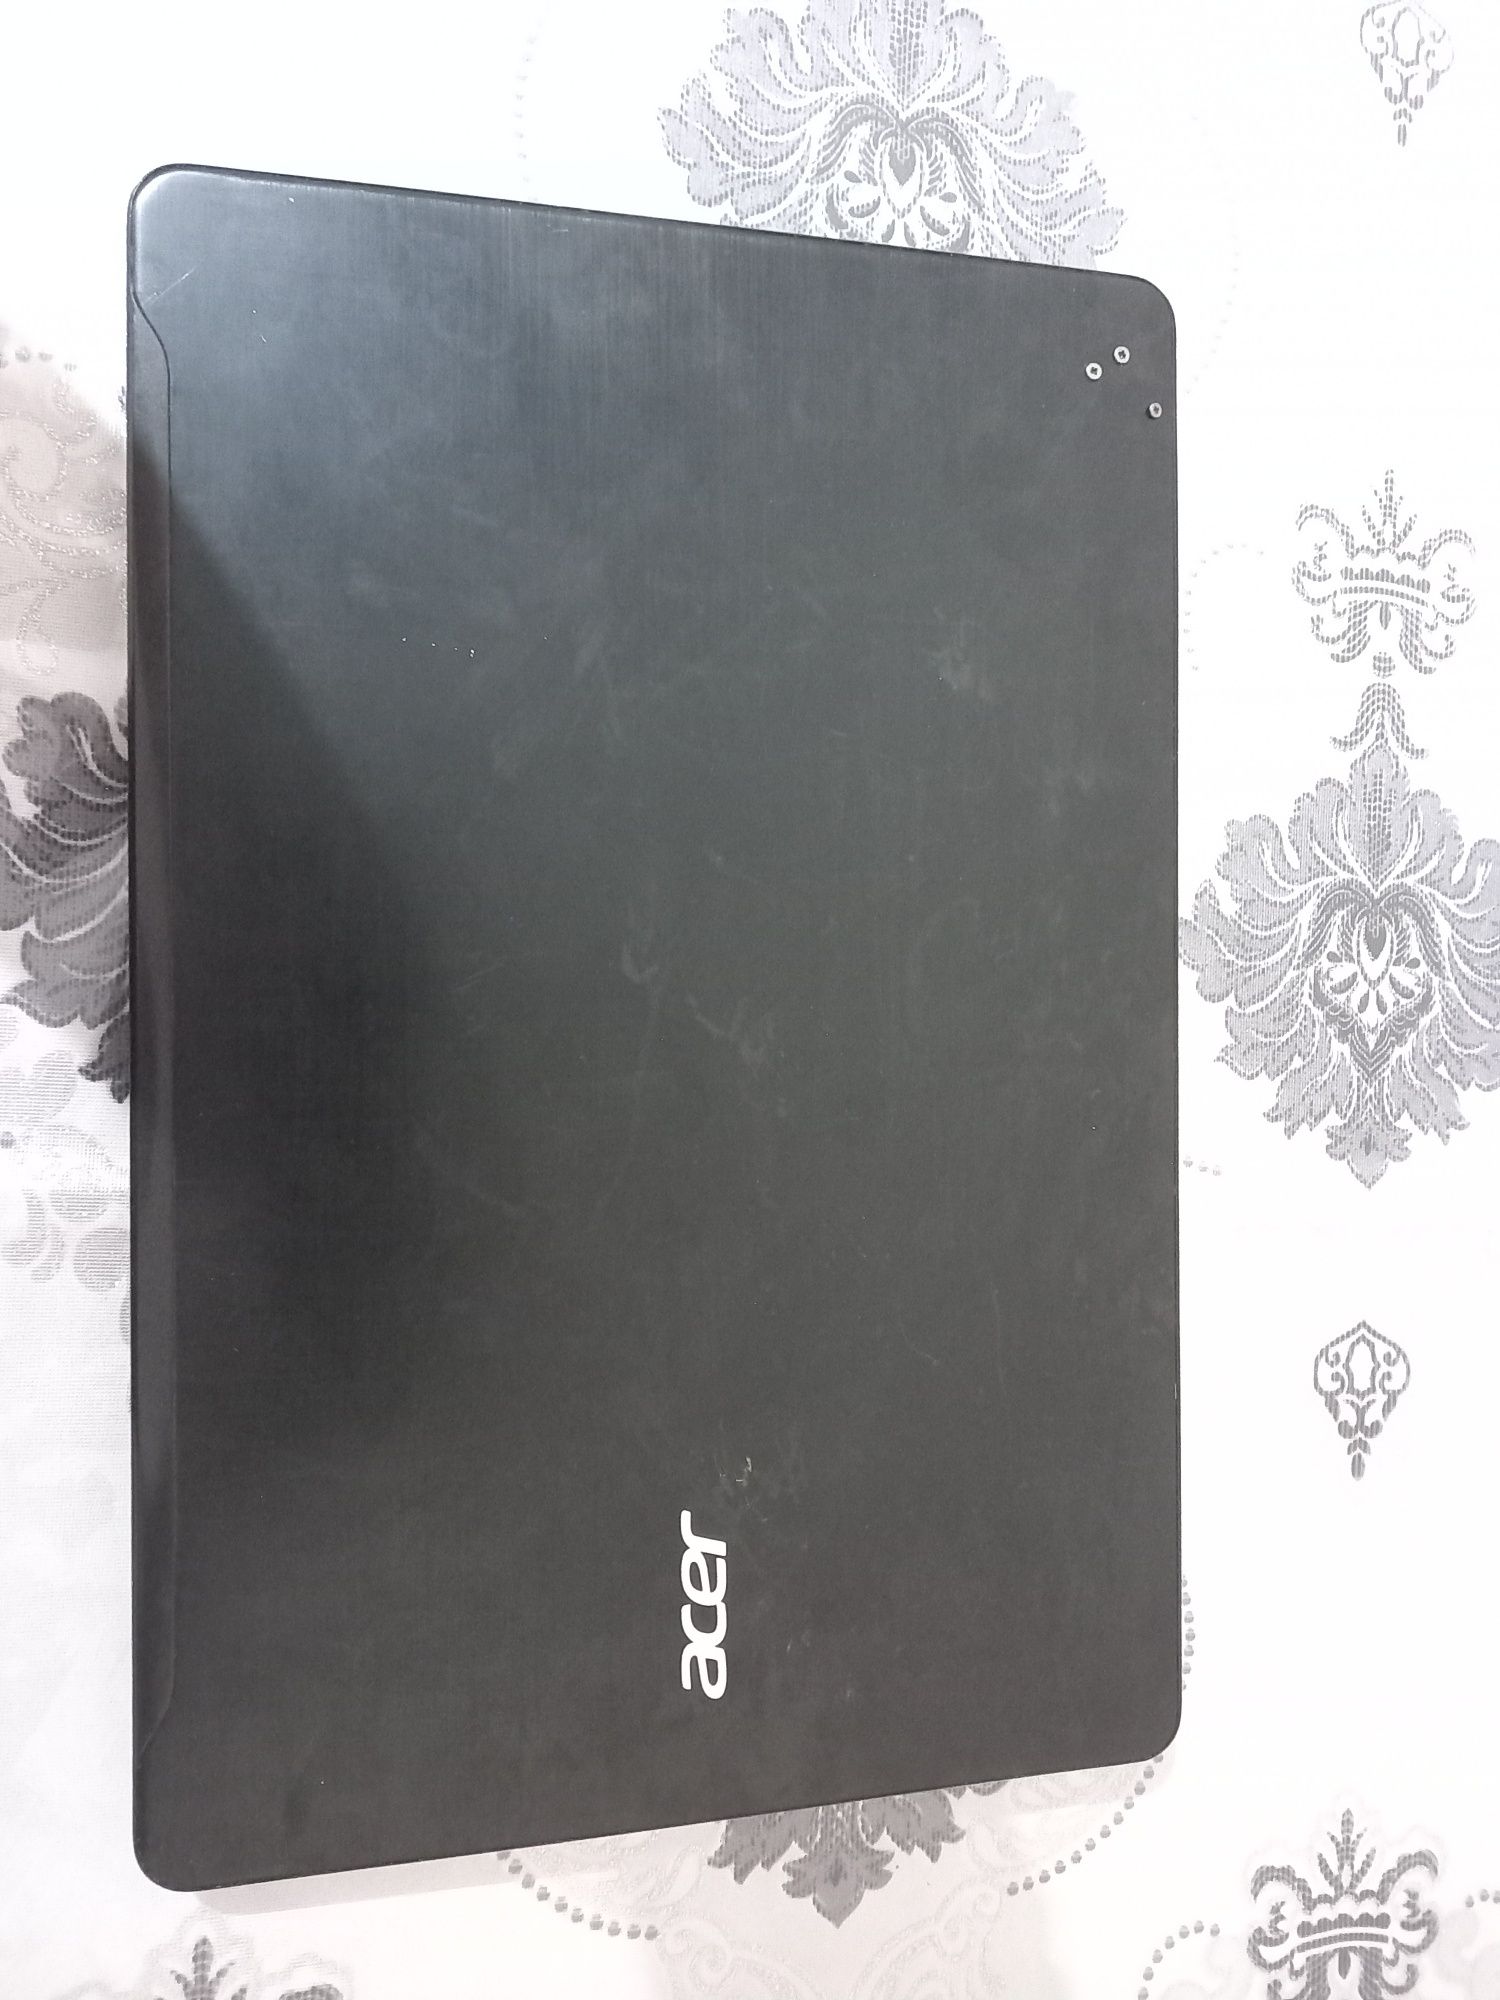 Acer intel core i5